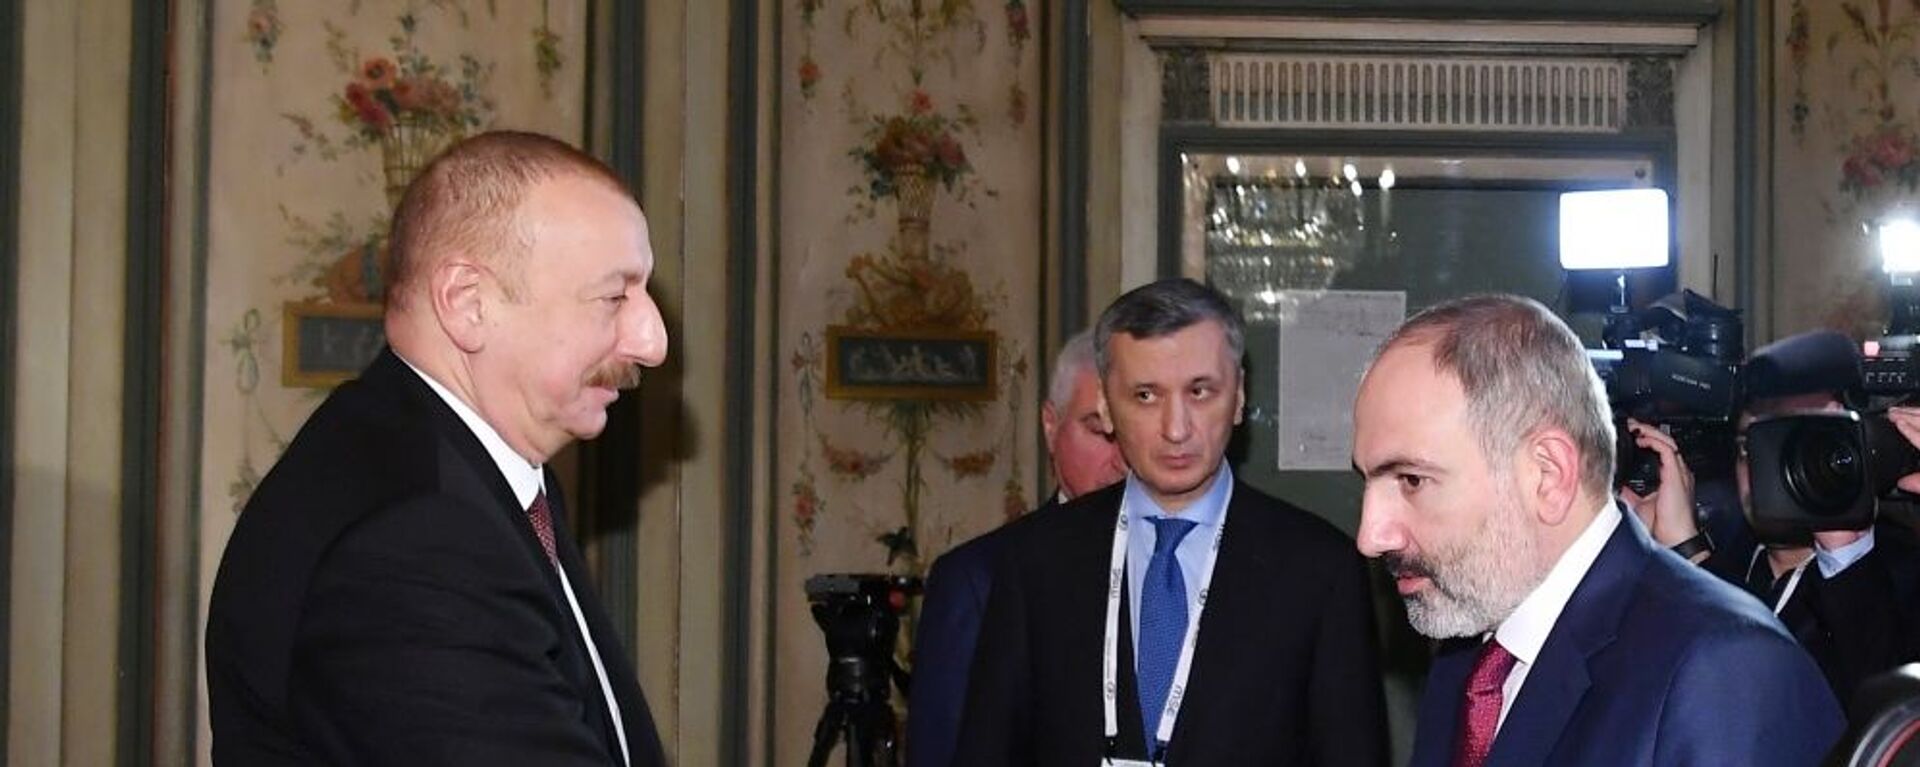 Президент Азербайджана Ильхам Алиев и премьер-министр Армении Николь Пашинян, фото из архива - Sputnik Азербайджан, 1920, 20.11.2021